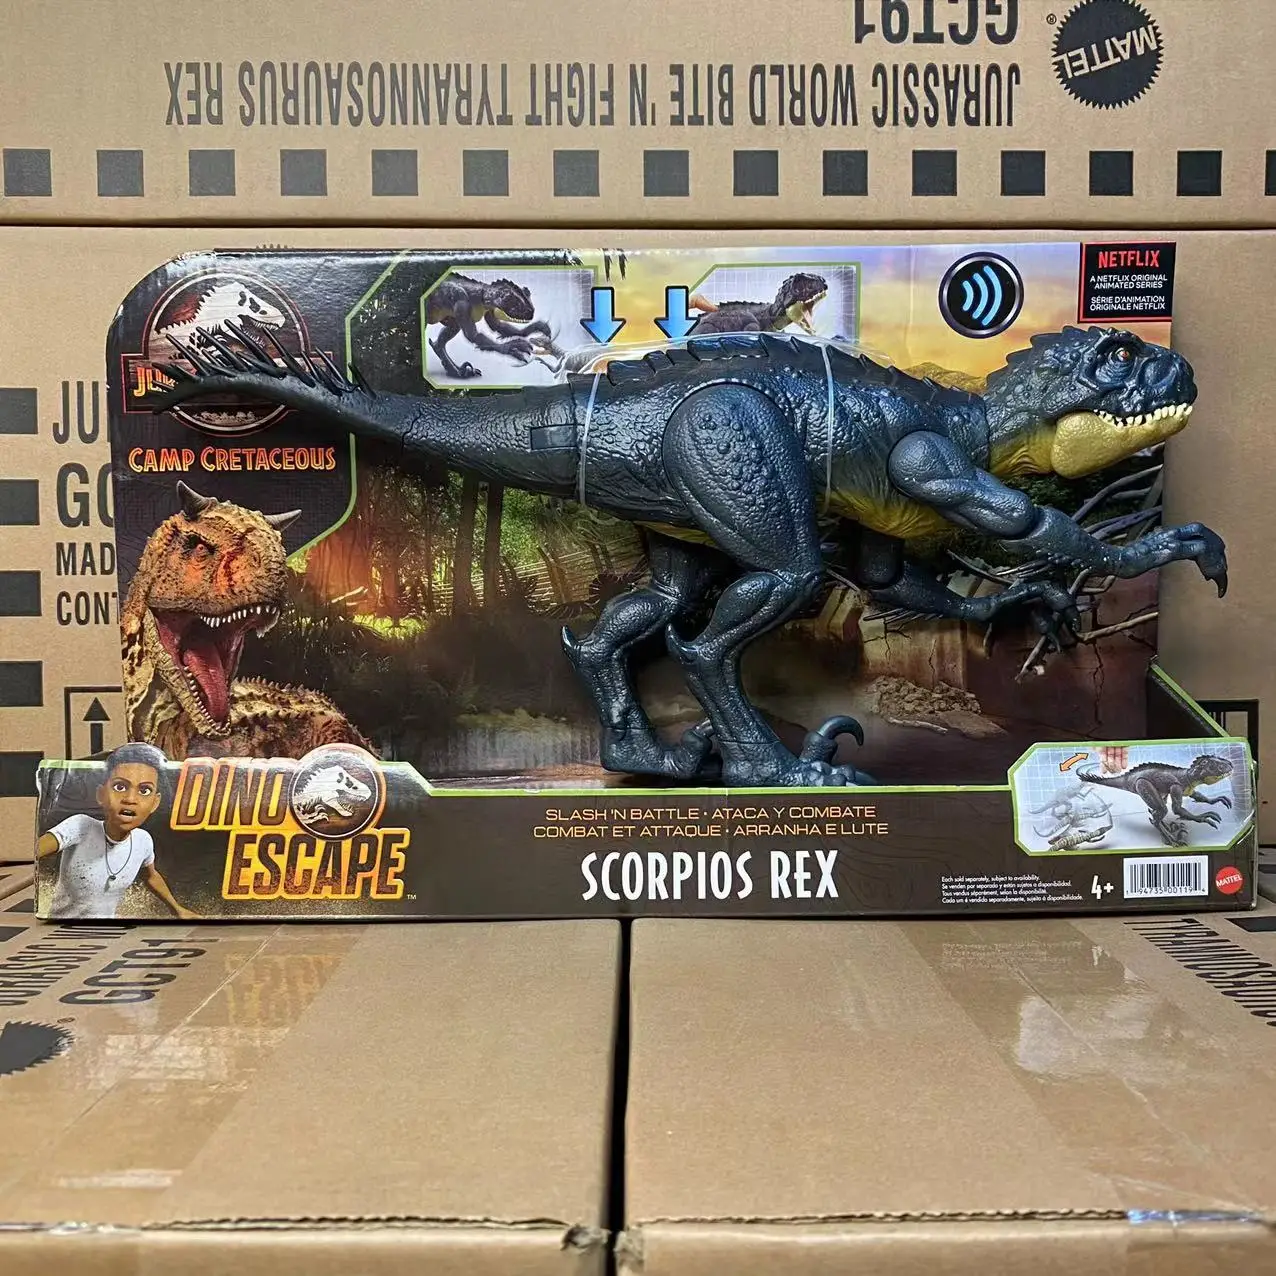 

MATTEL Jurassic World Toys Scorpios Rex Action & Sound Dinosaur Figure Slashing & Tail Whip Motions & Roar Sound HBT41